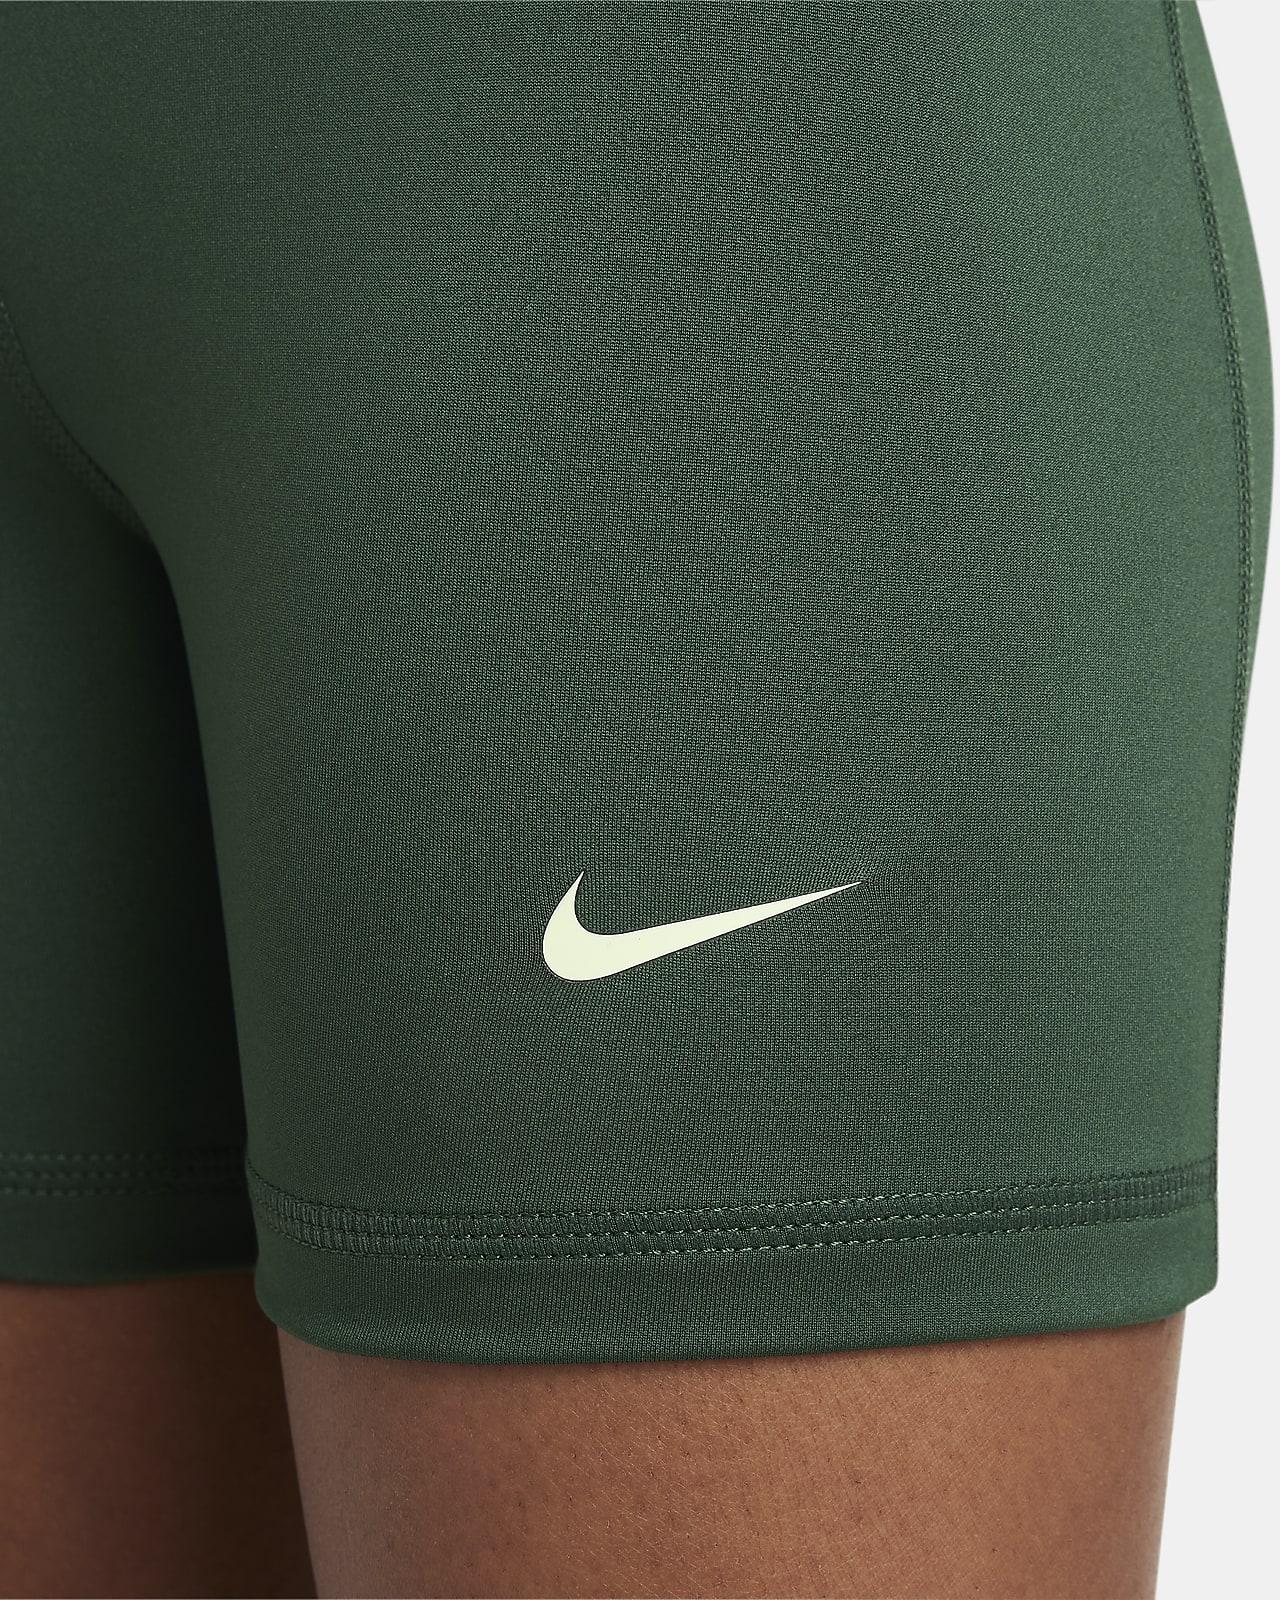 Shorts Nike Pro Dri Fit Feminino Verde Dq5586-370 - Starki